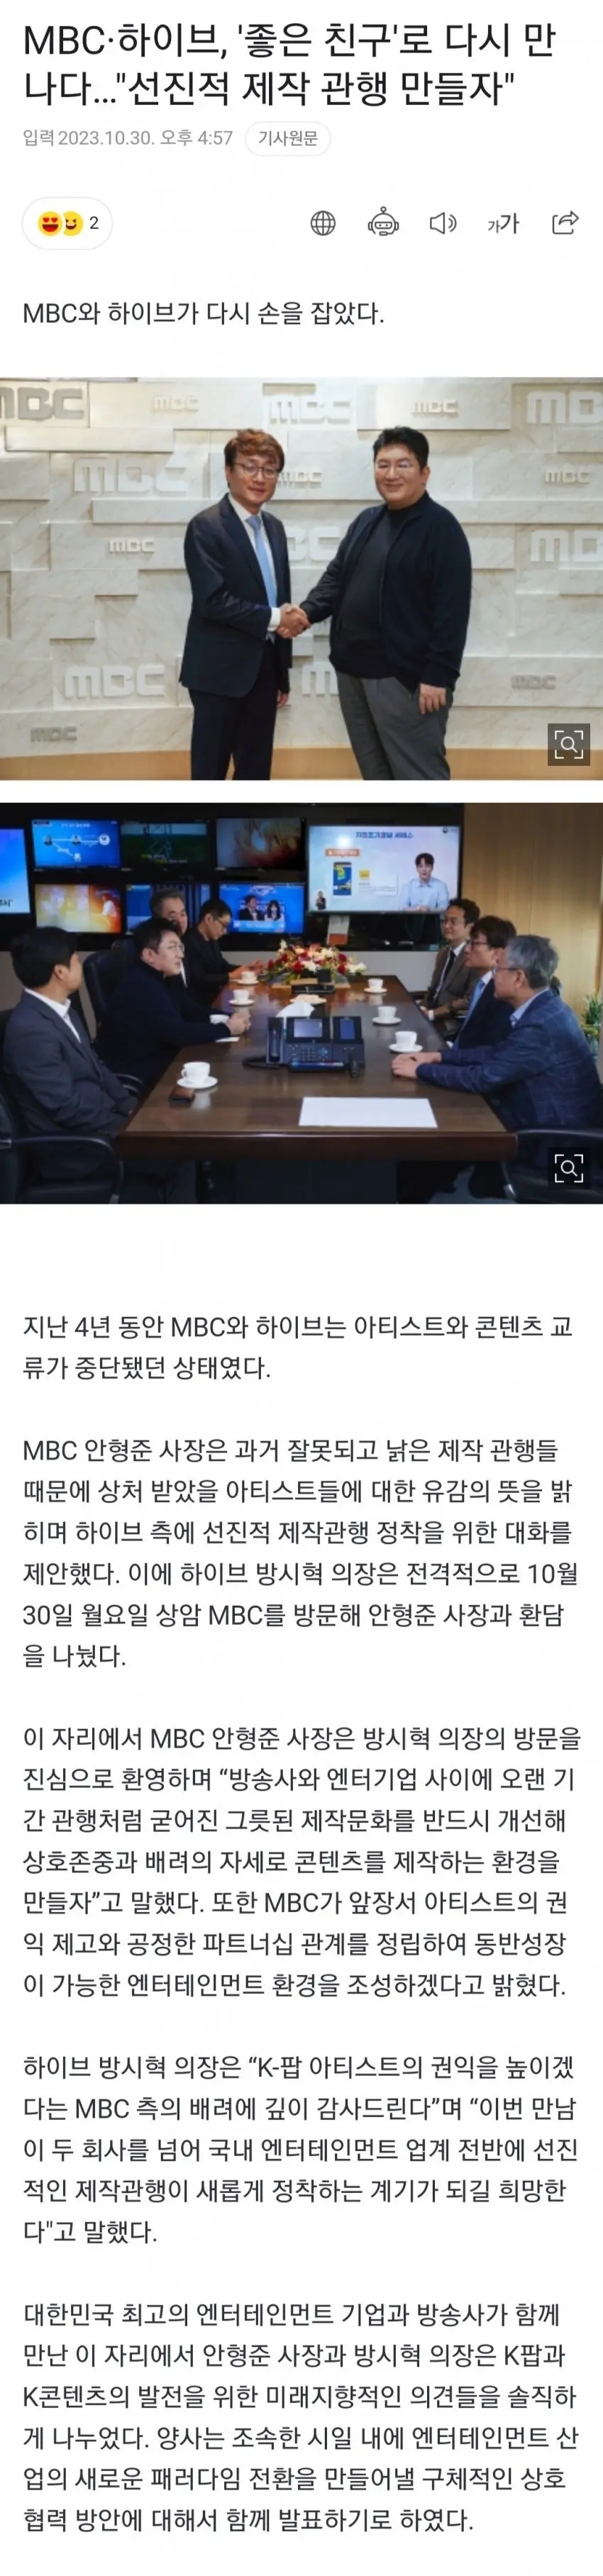 MBC, 하이브 드디어 화해 | mbong.kr 엠봉